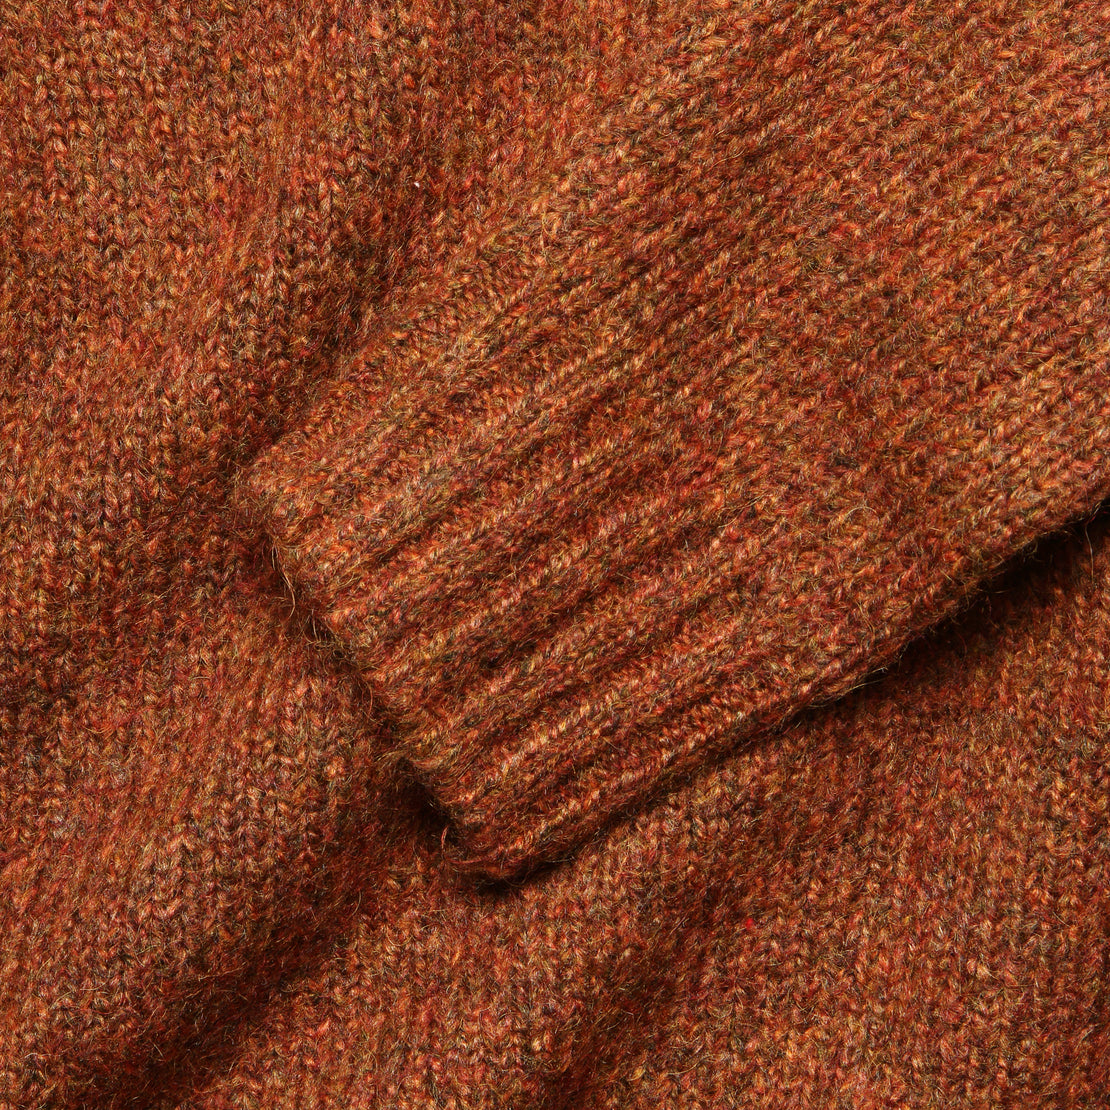 Fuzzy Raglan Crewneck Sweater - Toffee - Alex Mill - STAG Provisions - Tops - Sweater